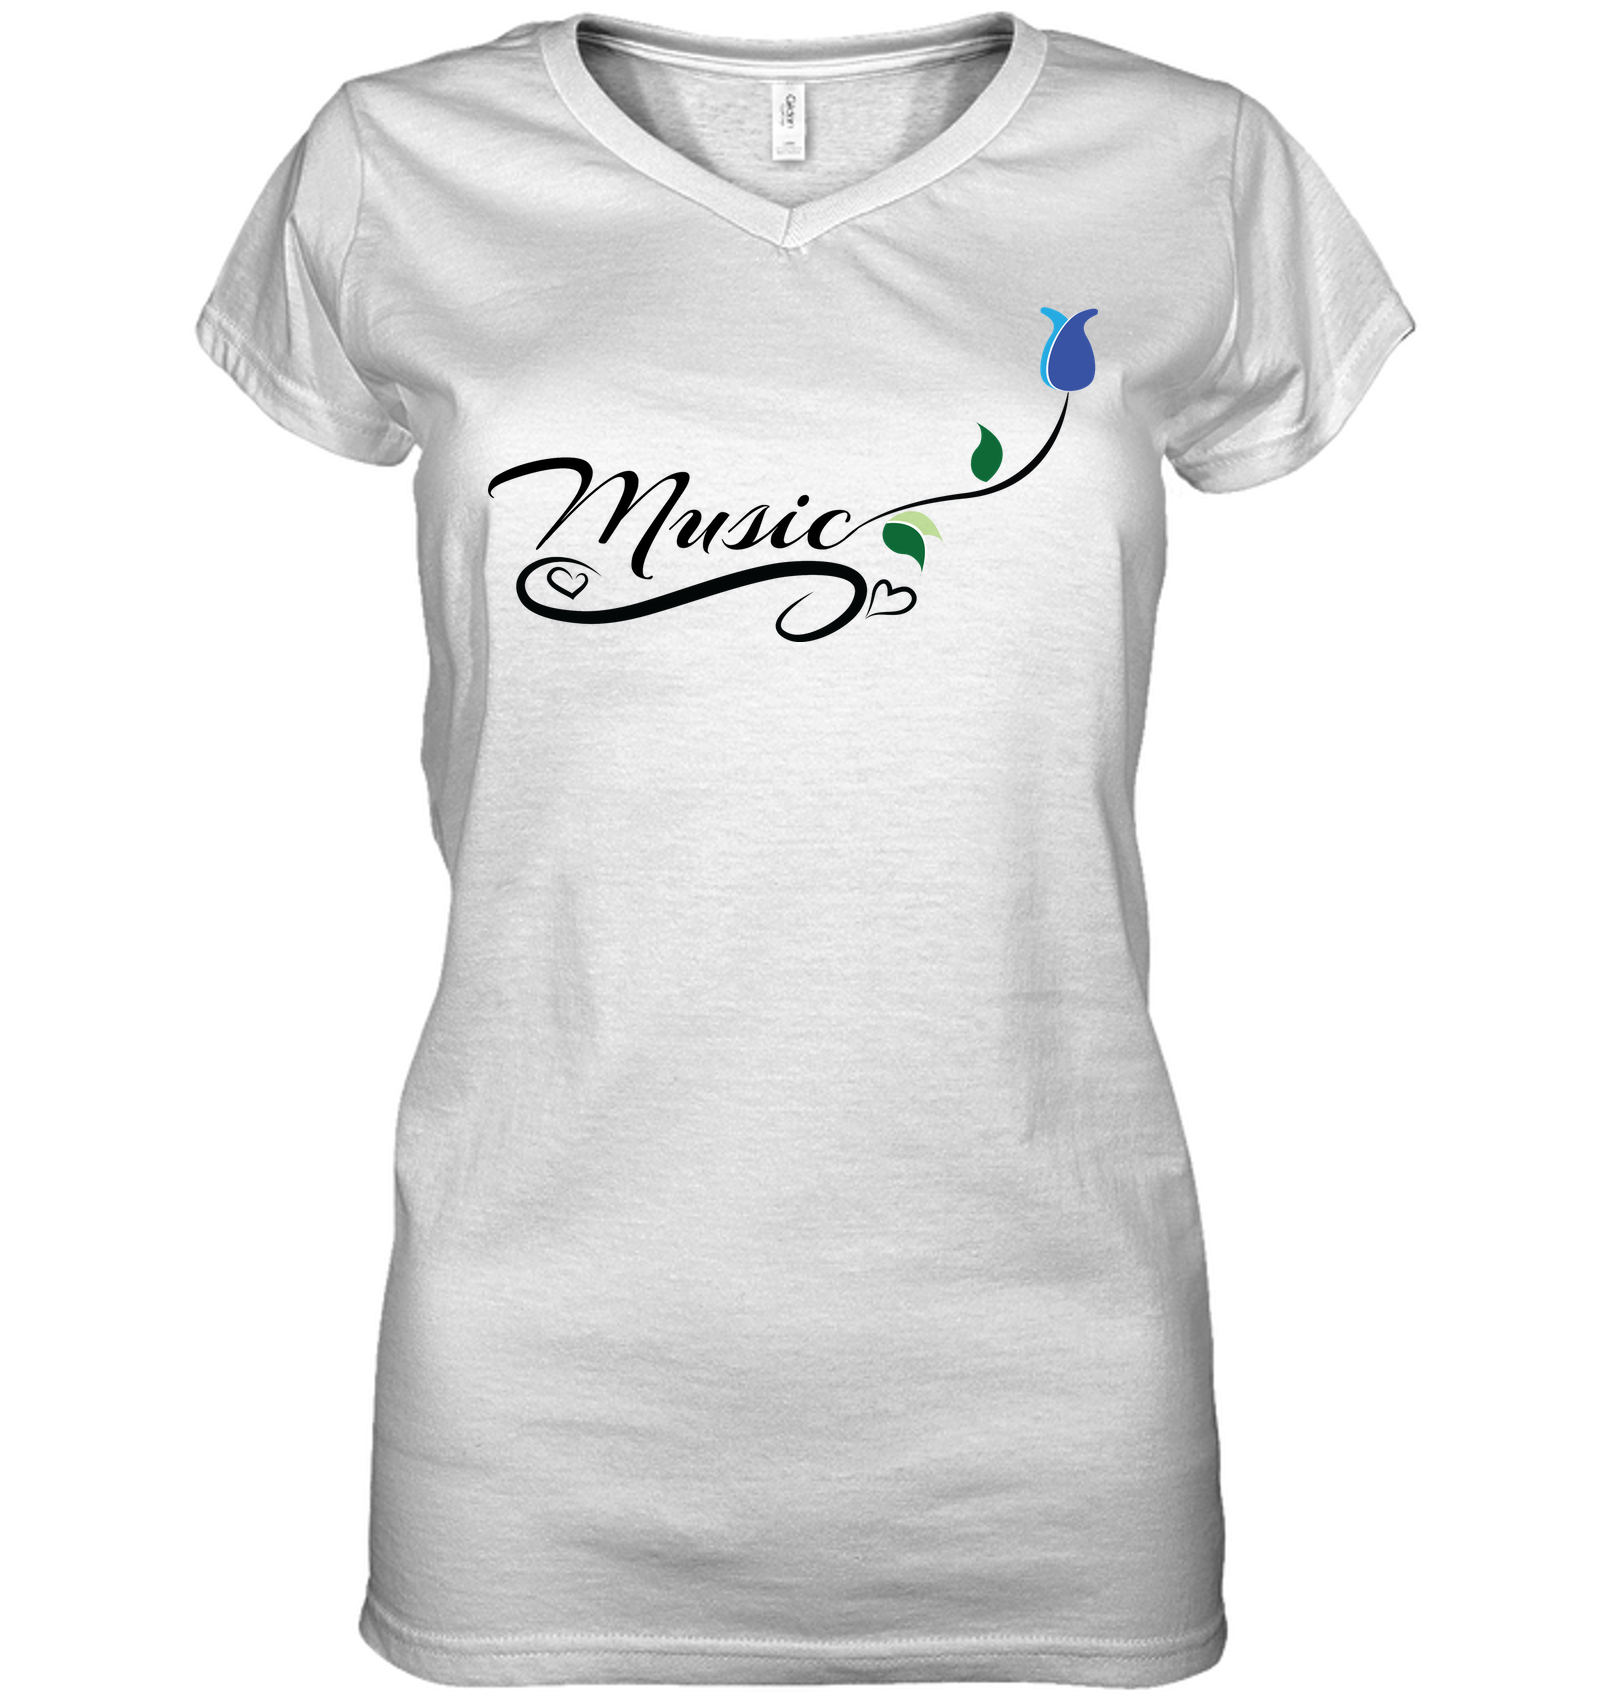 Music and Tulips - Hanes Women's Nano-T® V-Neck T-Shirt